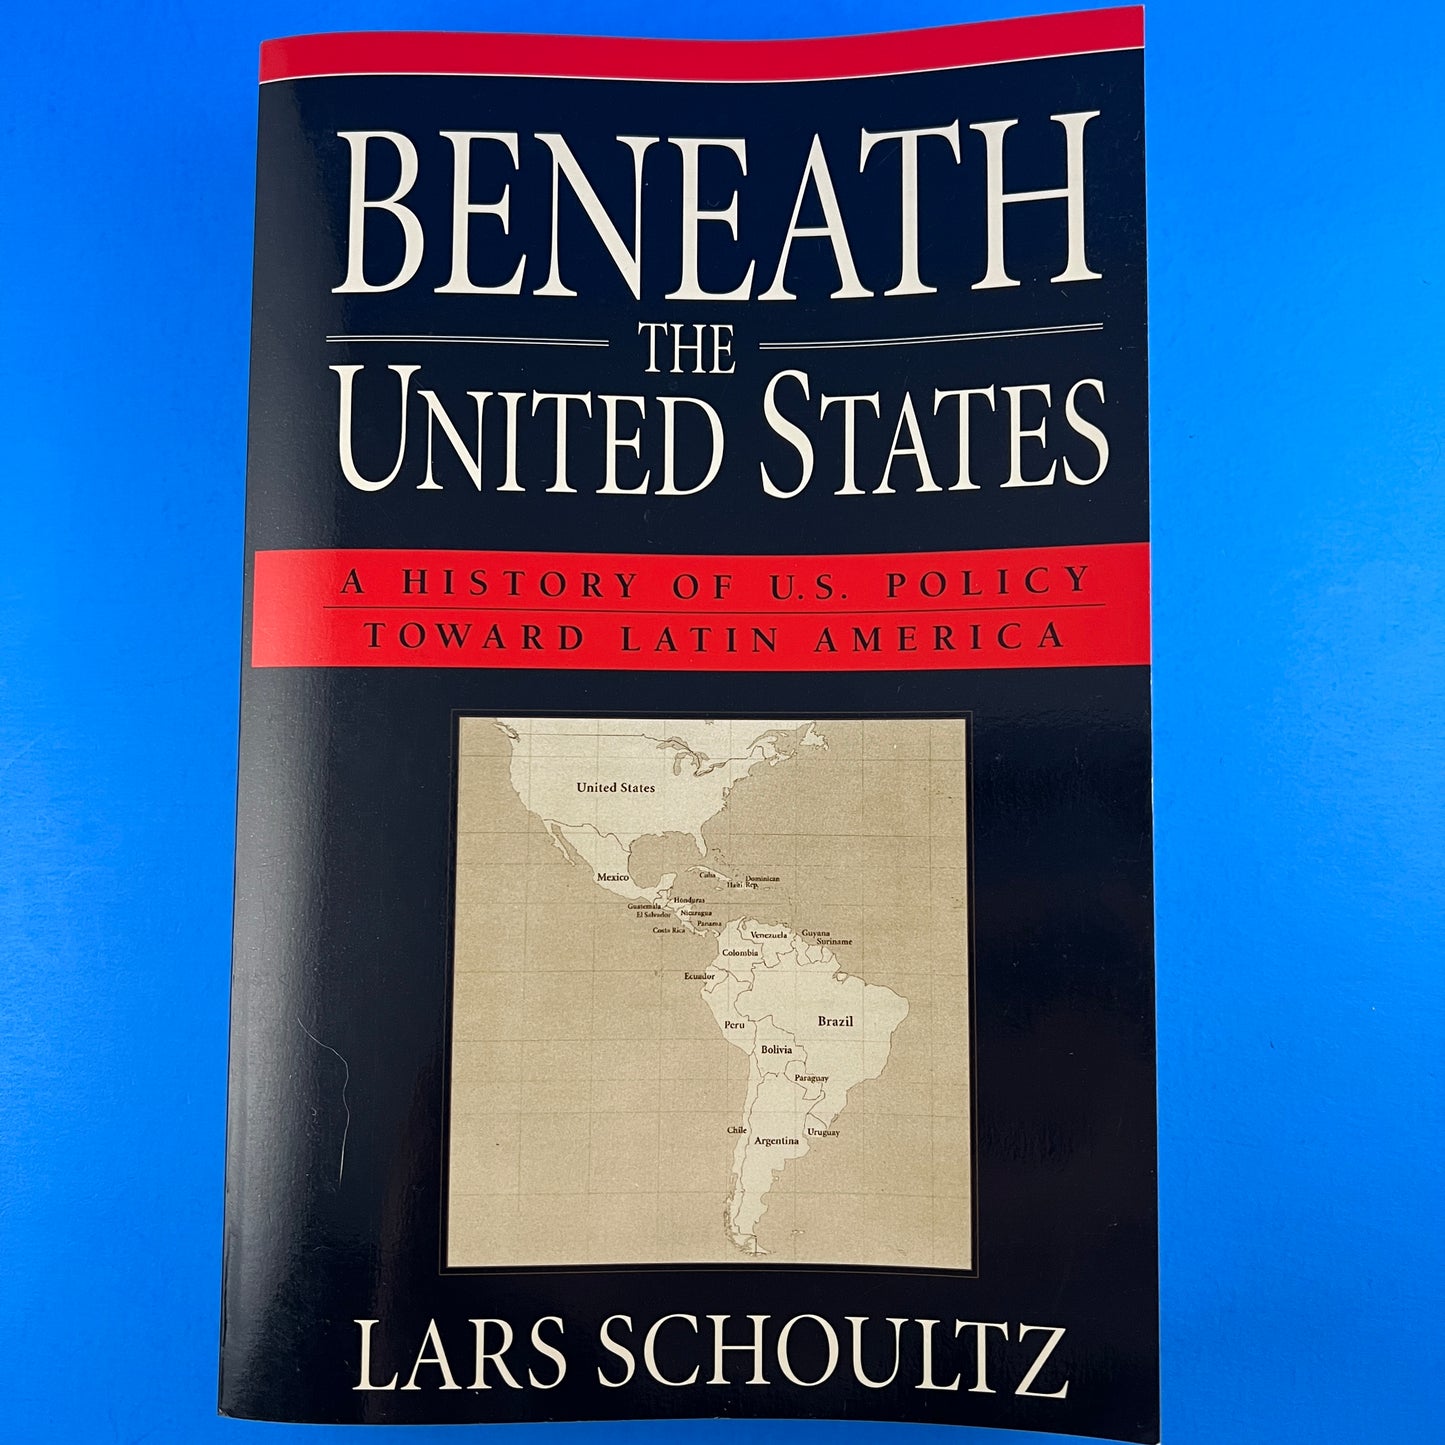 Beneath the United States: A History of U.S. Policy Toward Latin America